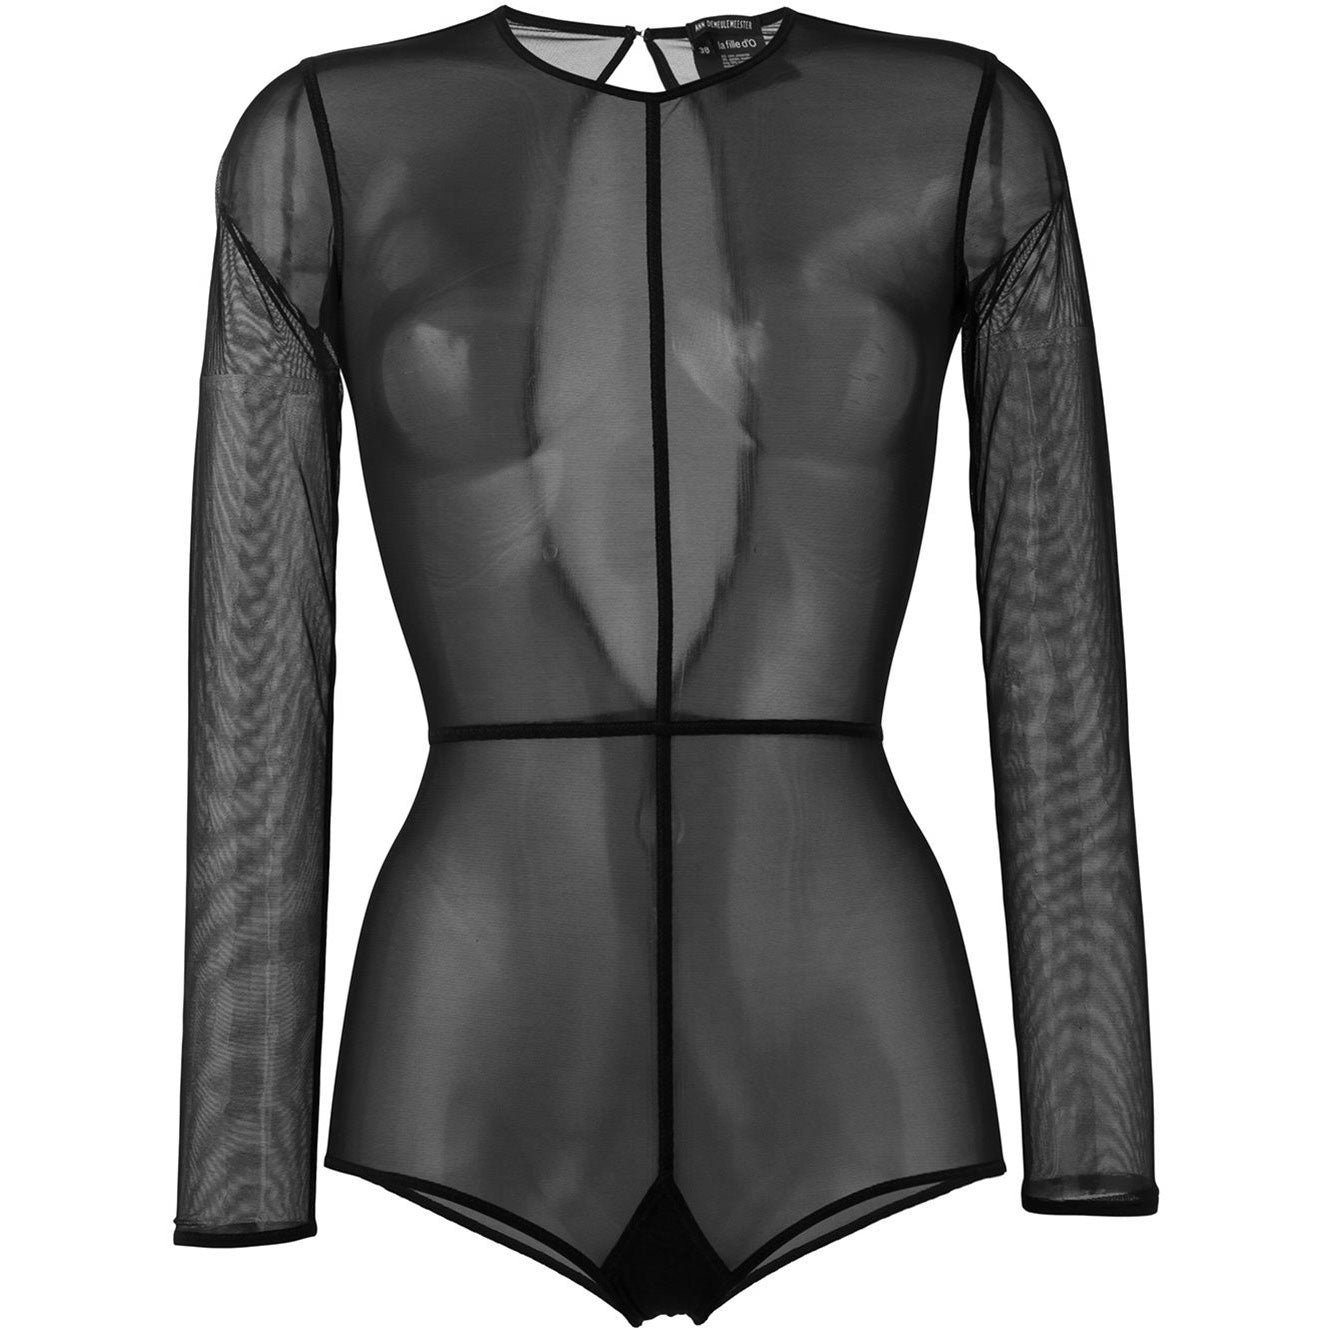 Ann Demeulemeester X la fille d'O longsleeve bodysuit in sheer back mesh with seam detail